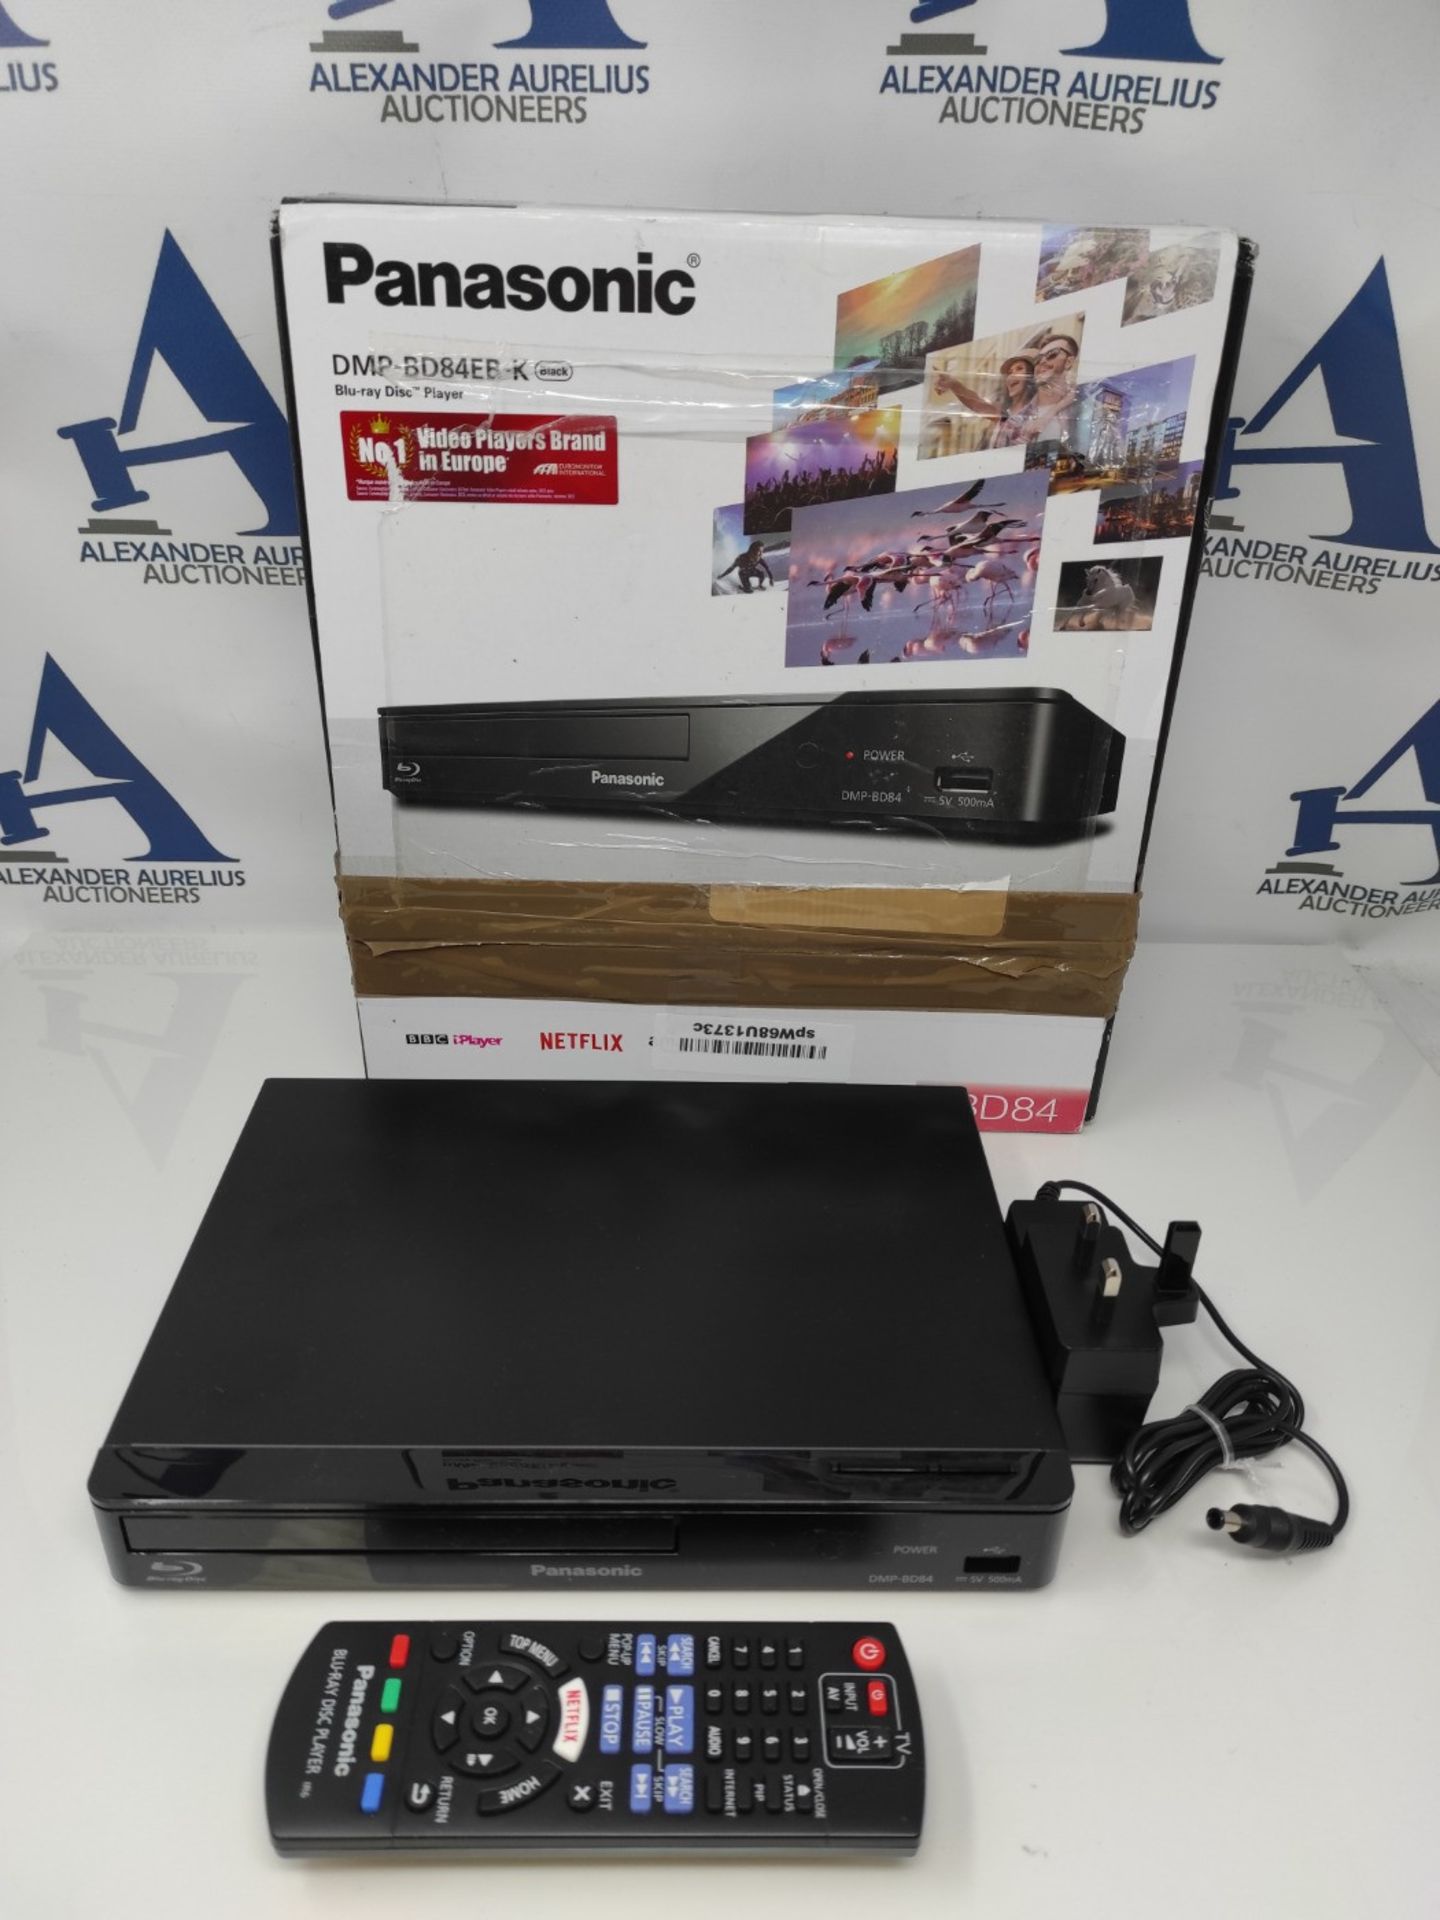 RRP £64.00 Panasonic DMP-BD84EB-K Smart ICOS. YouTube, Netflix etc. HDMI output. HDD Playback.